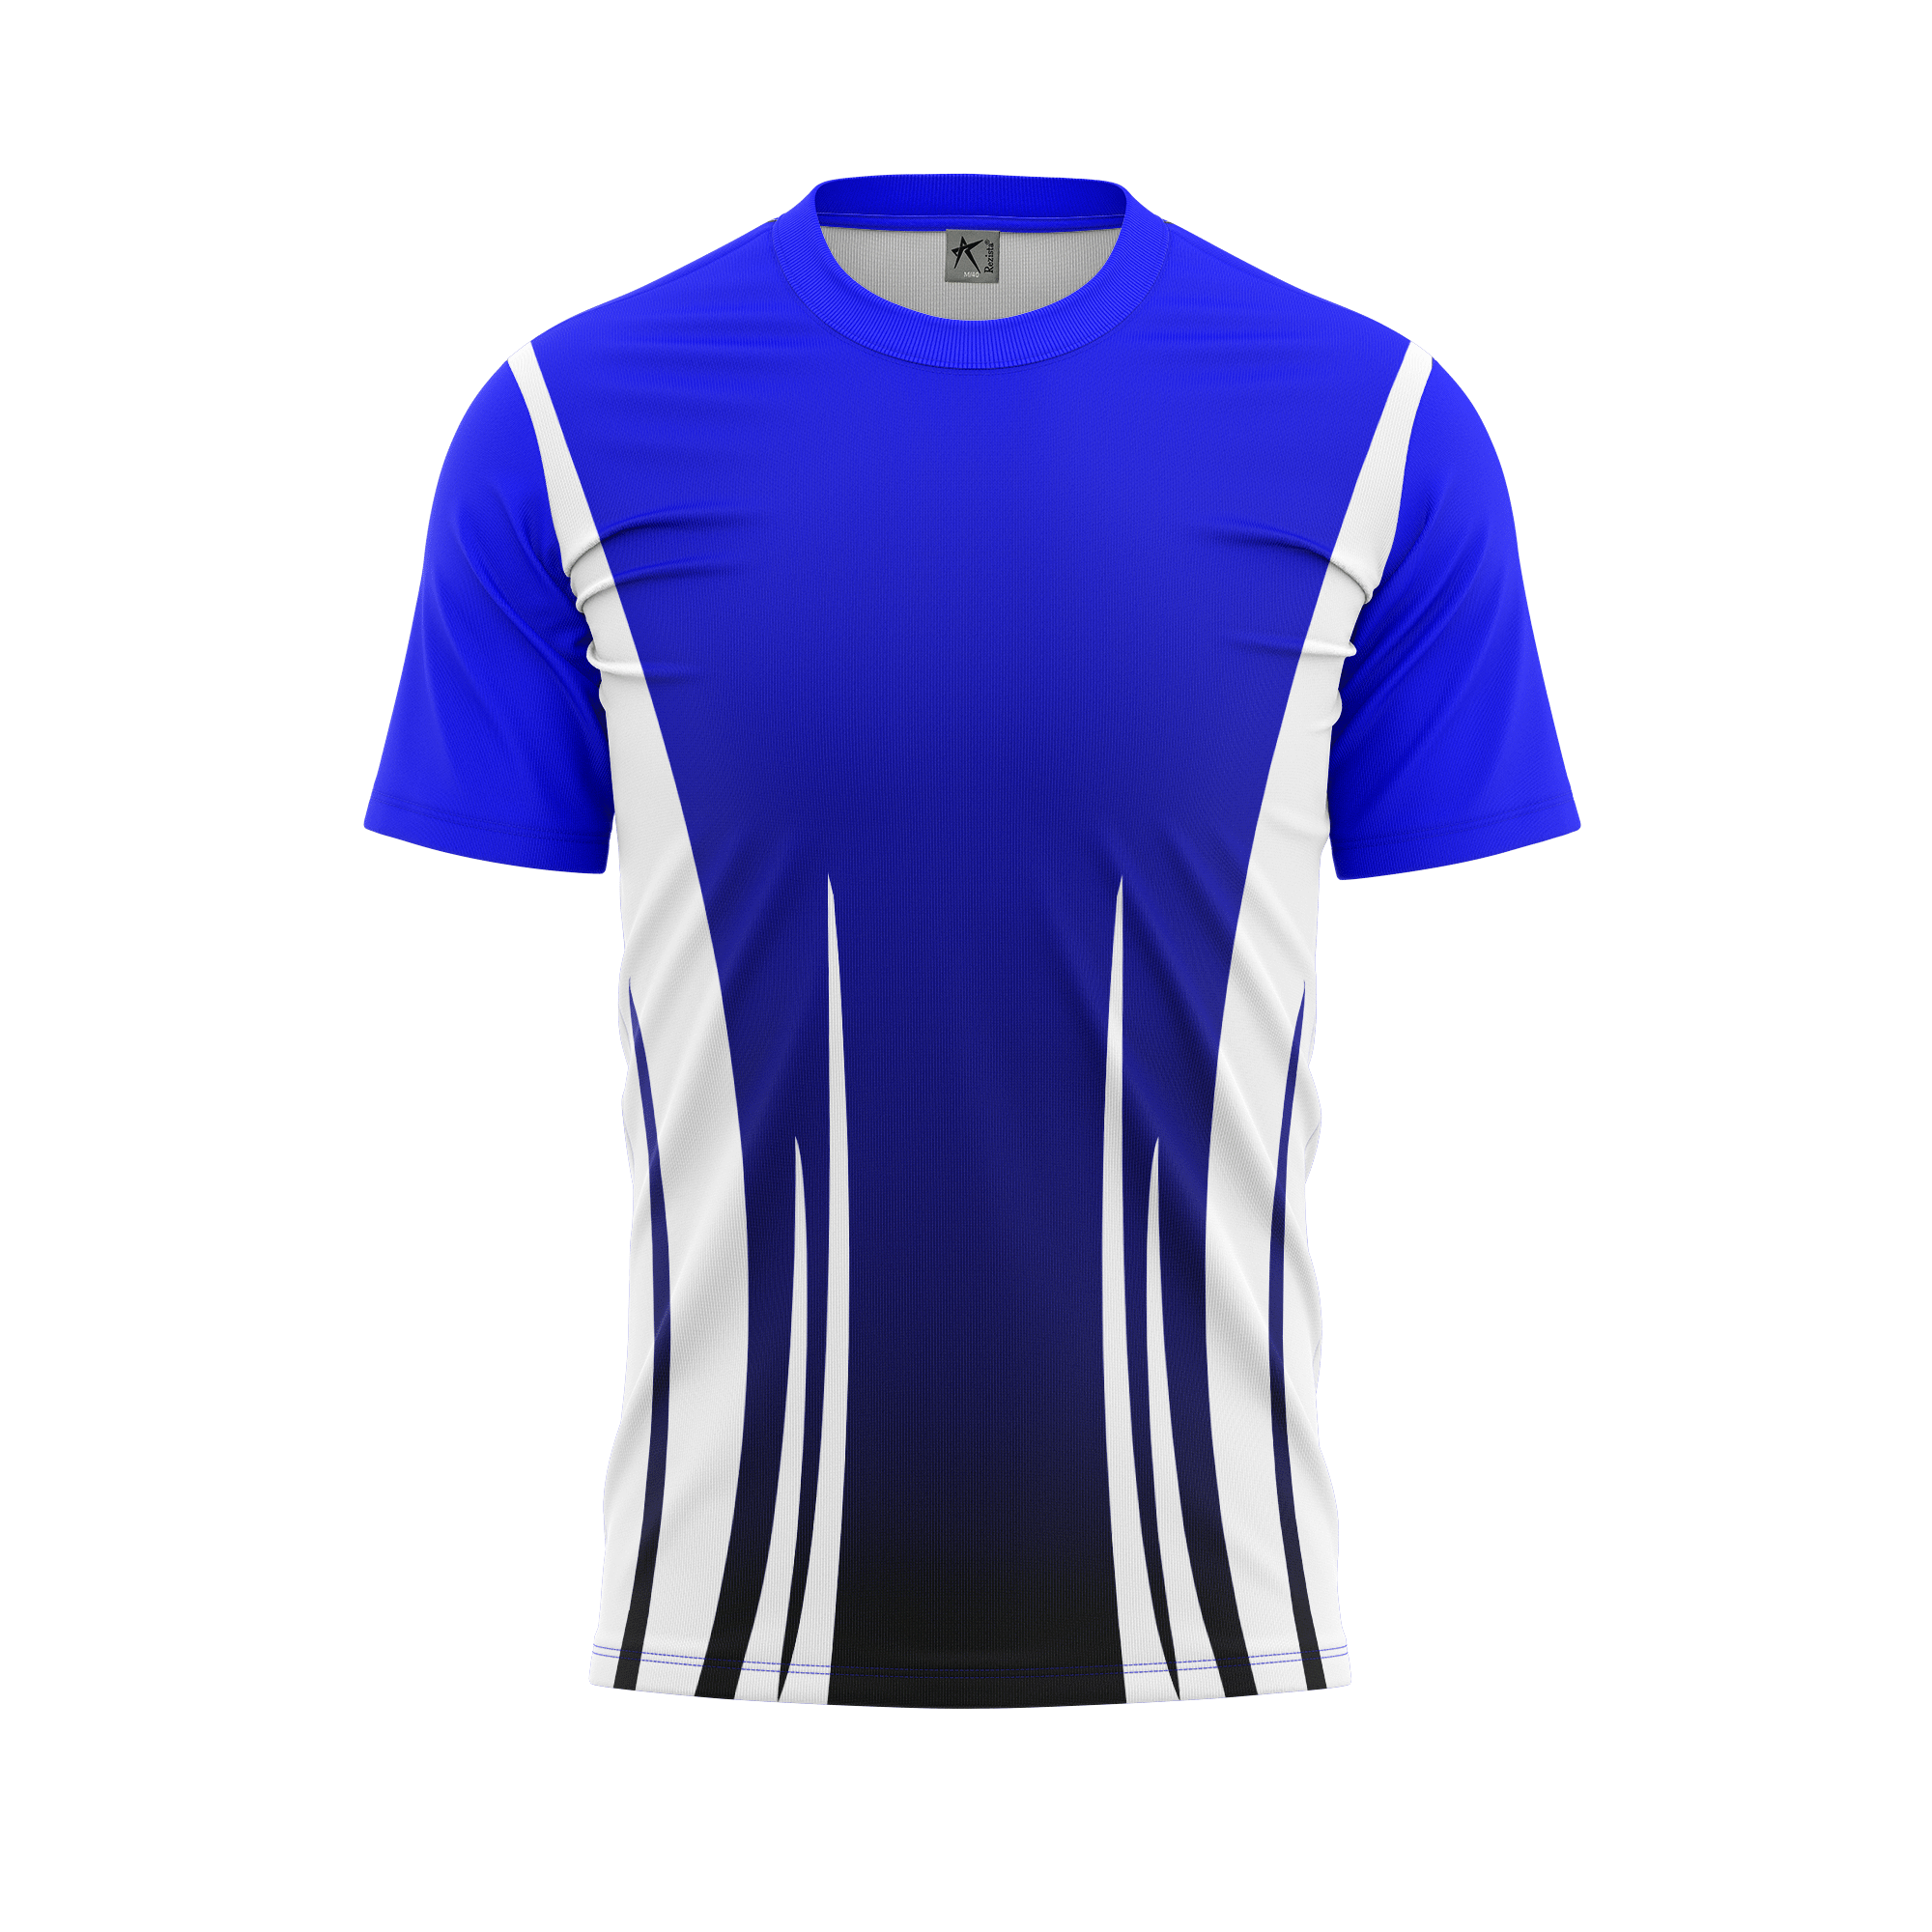 Rezista Customized Jersey - Sub Design-R.Blue-6 | Customized T-shirts ...